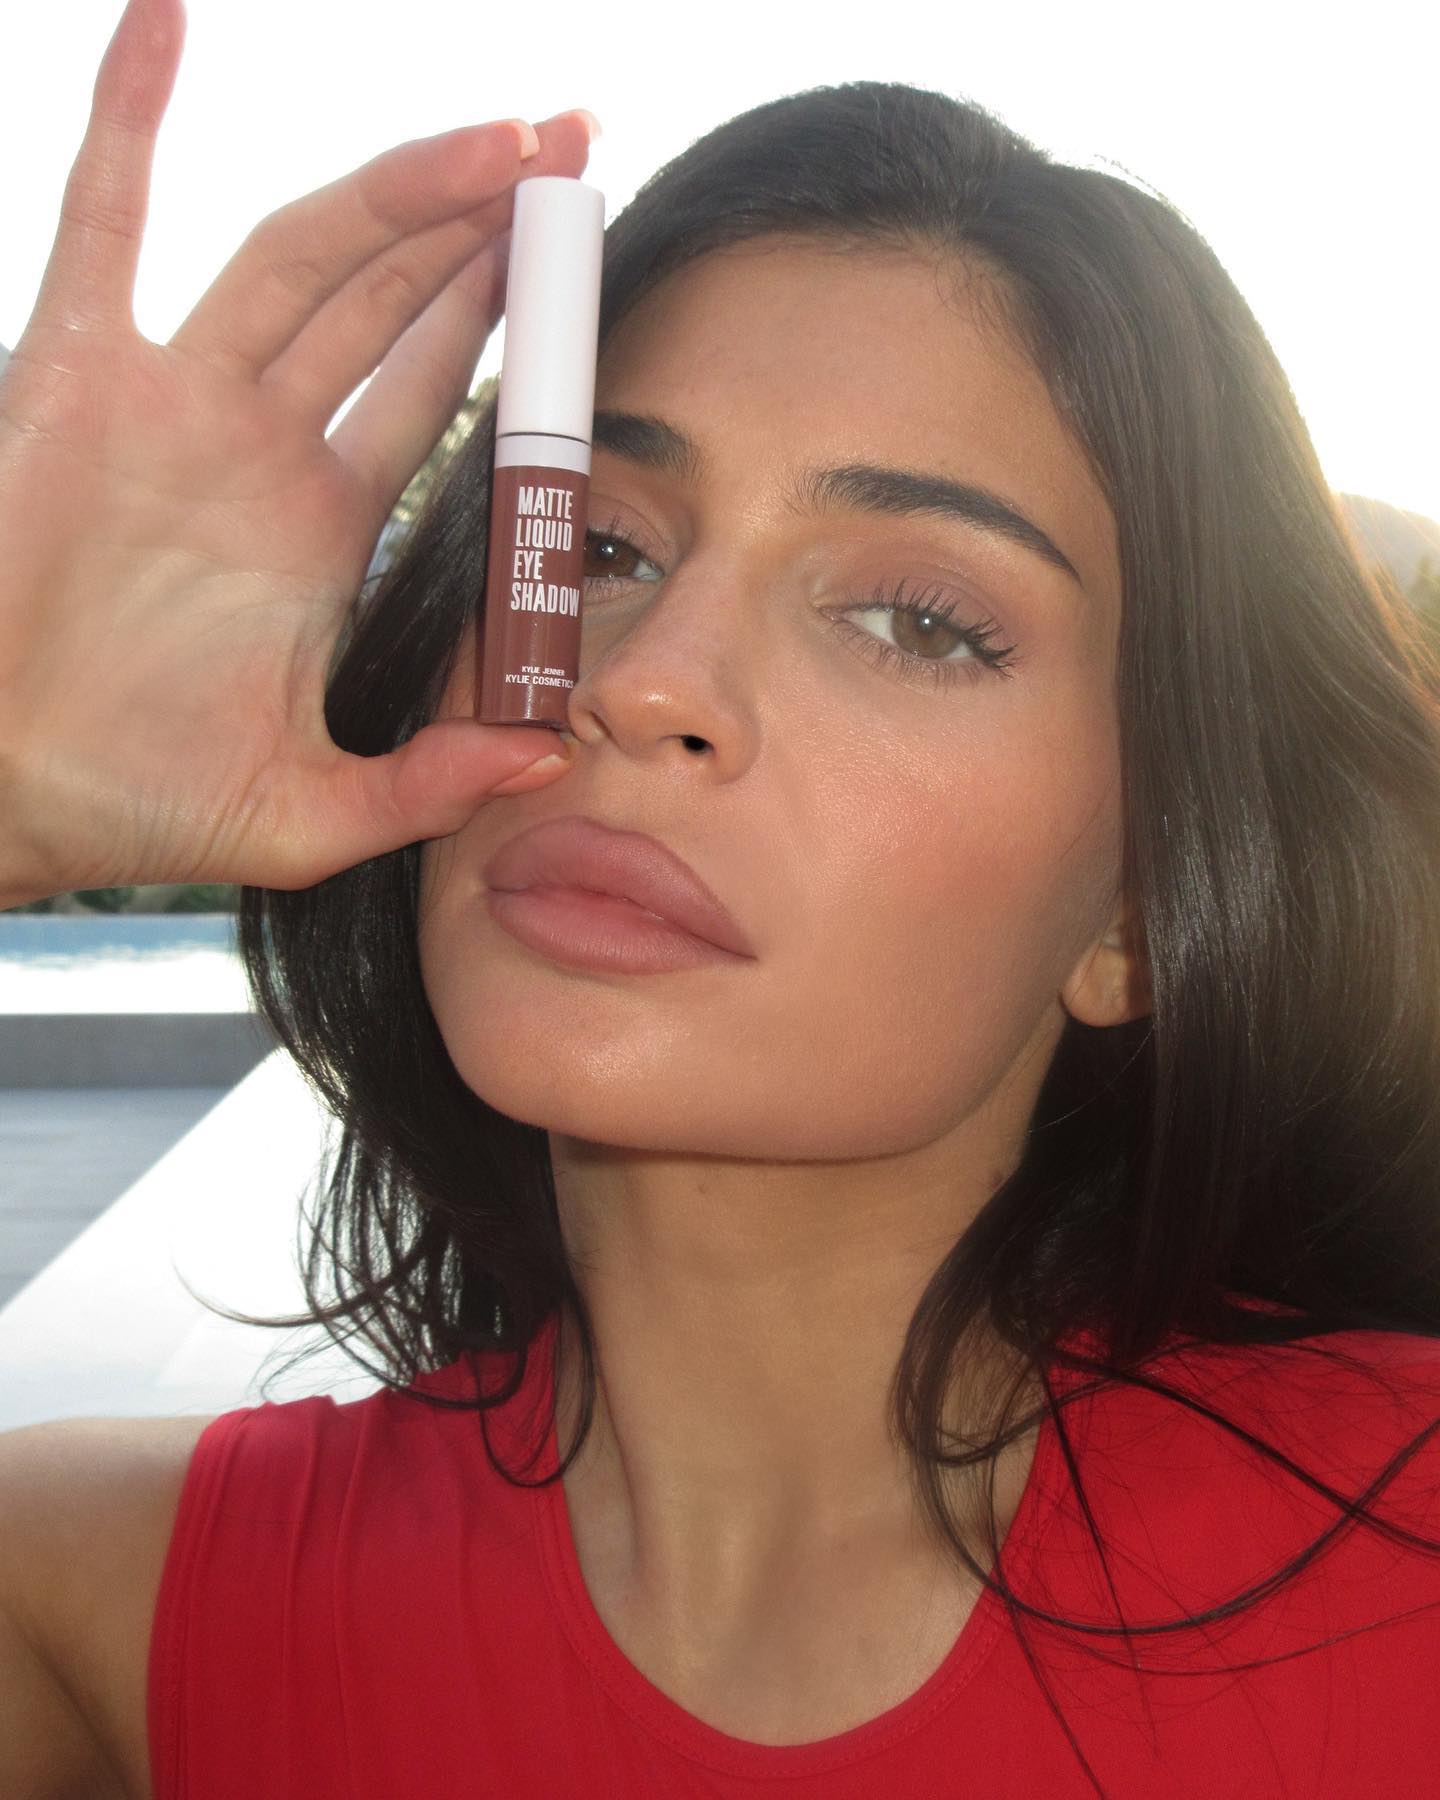 Photo n°4 : Les selfies Red Hot de Kylie Jenner !